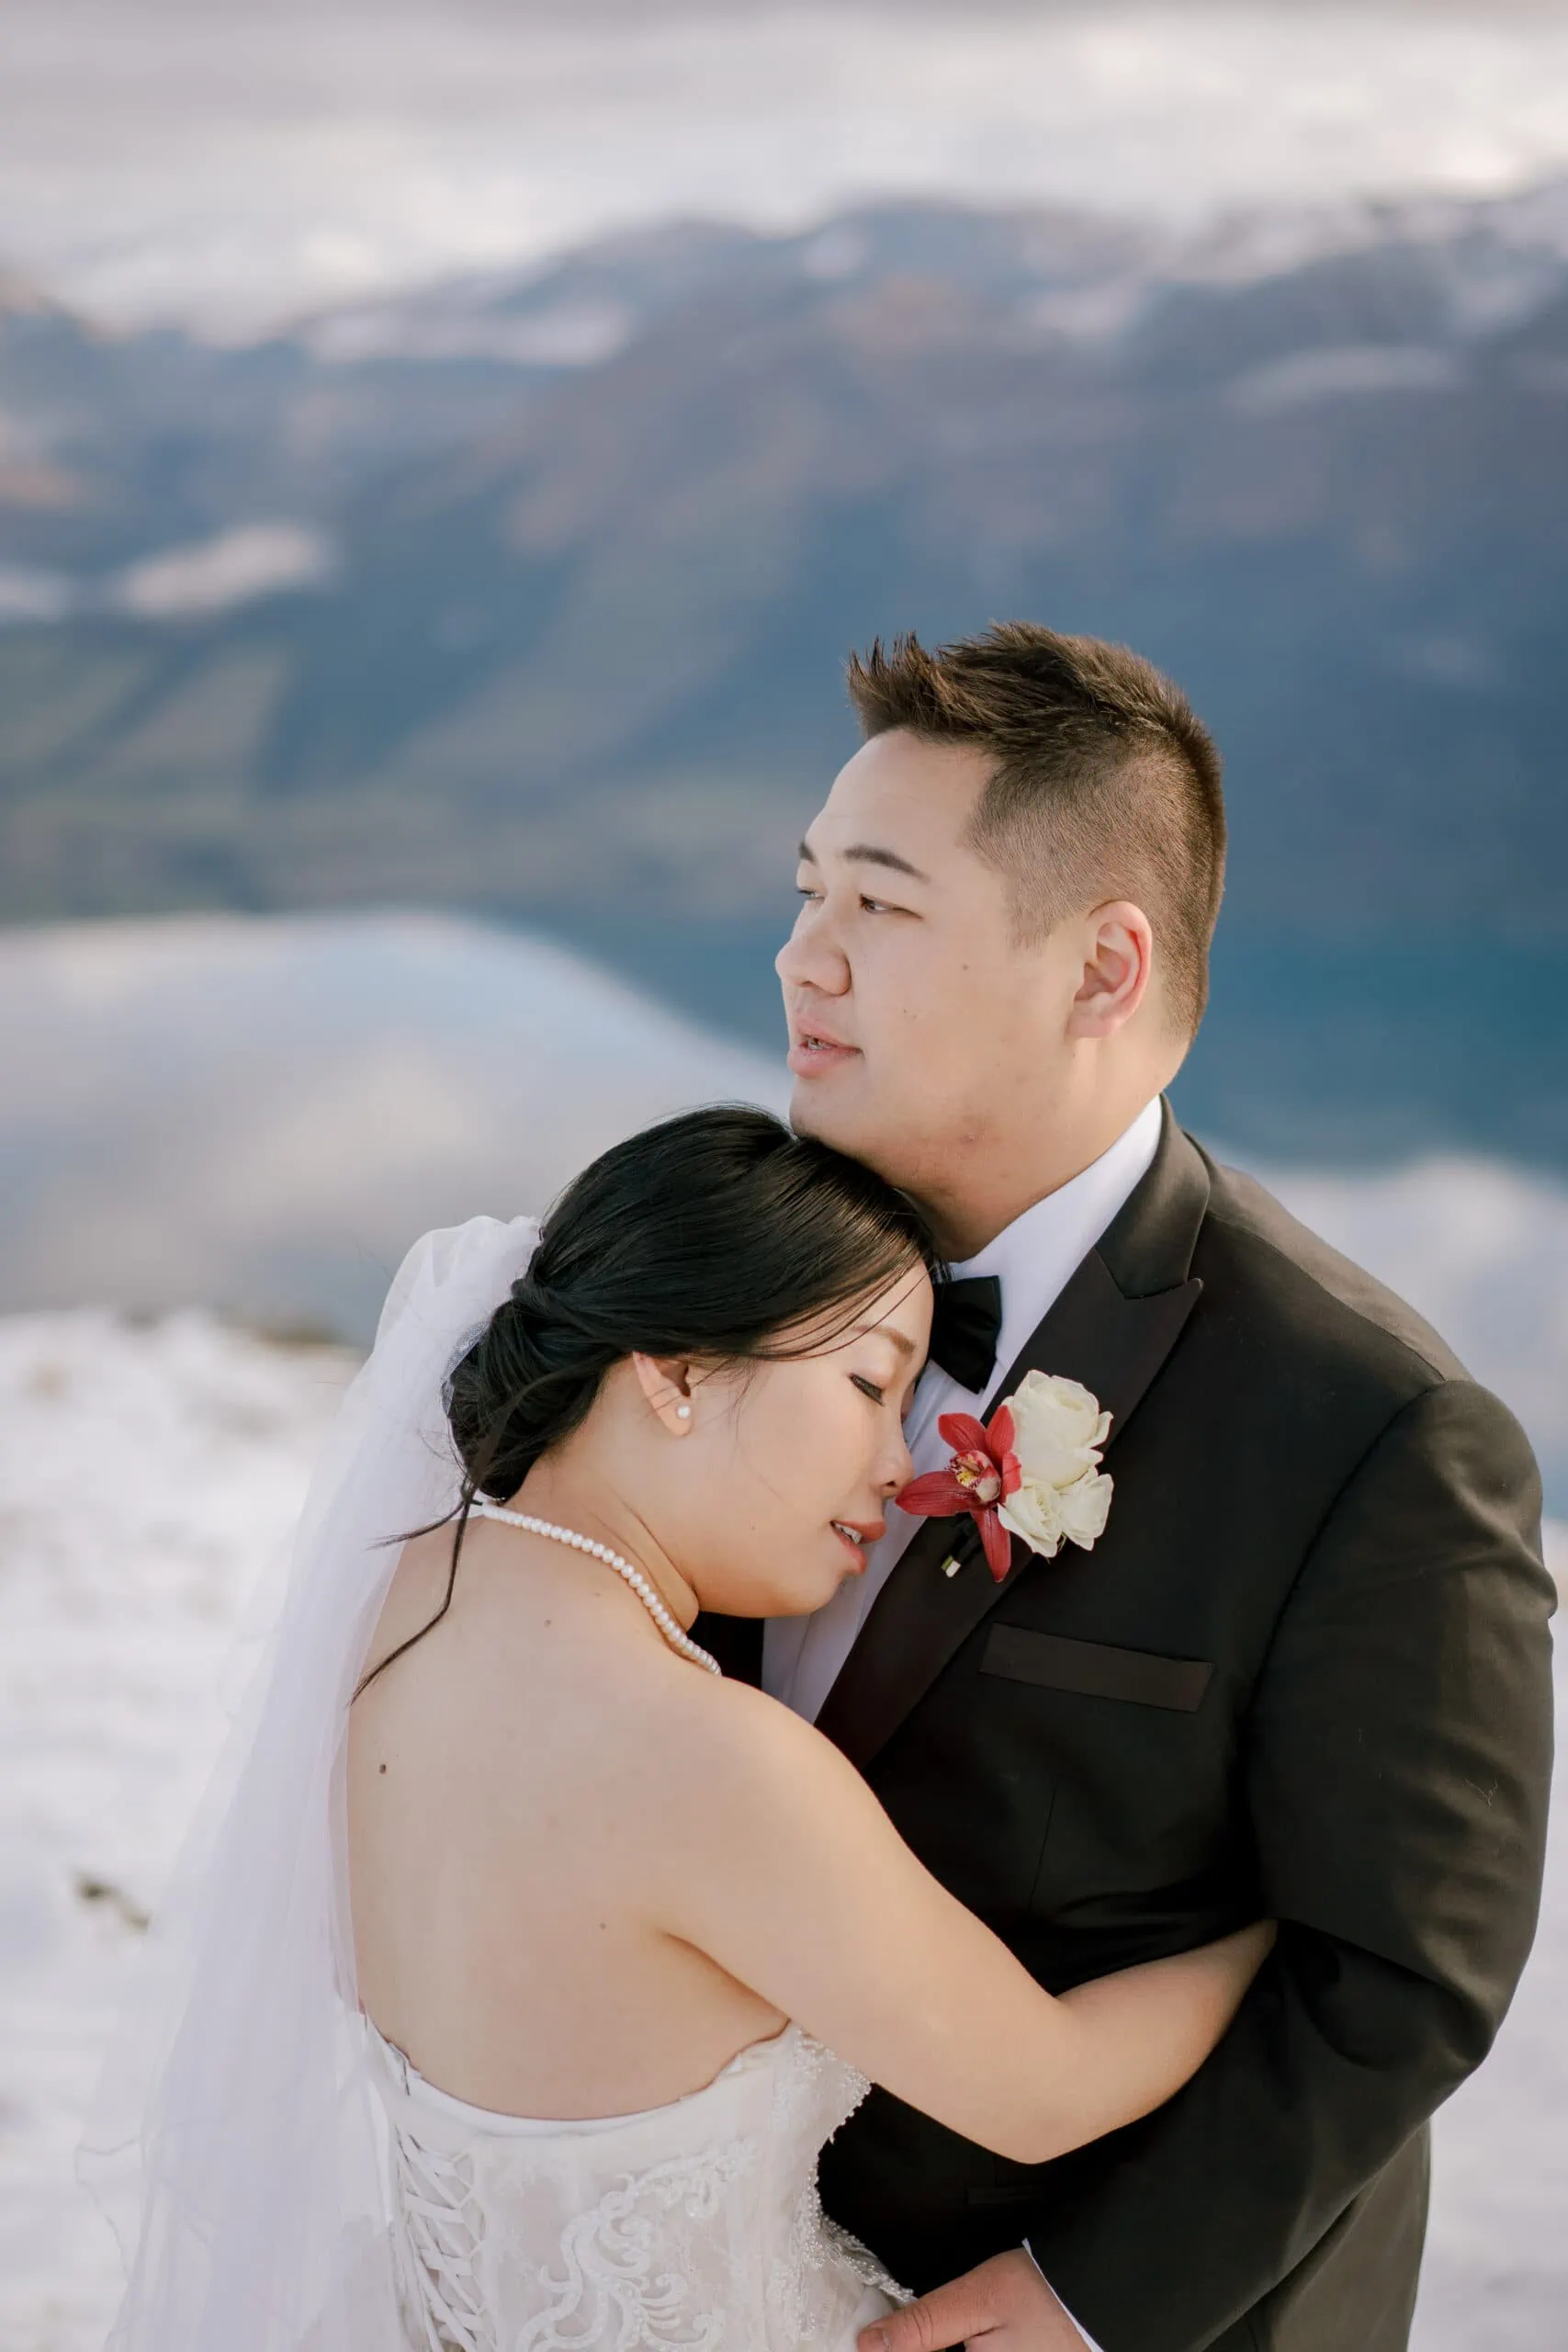 Queenstown New Zealand Elopement Wedding Photographer - Lam and Wendy's snowy mountain wedding embrace.